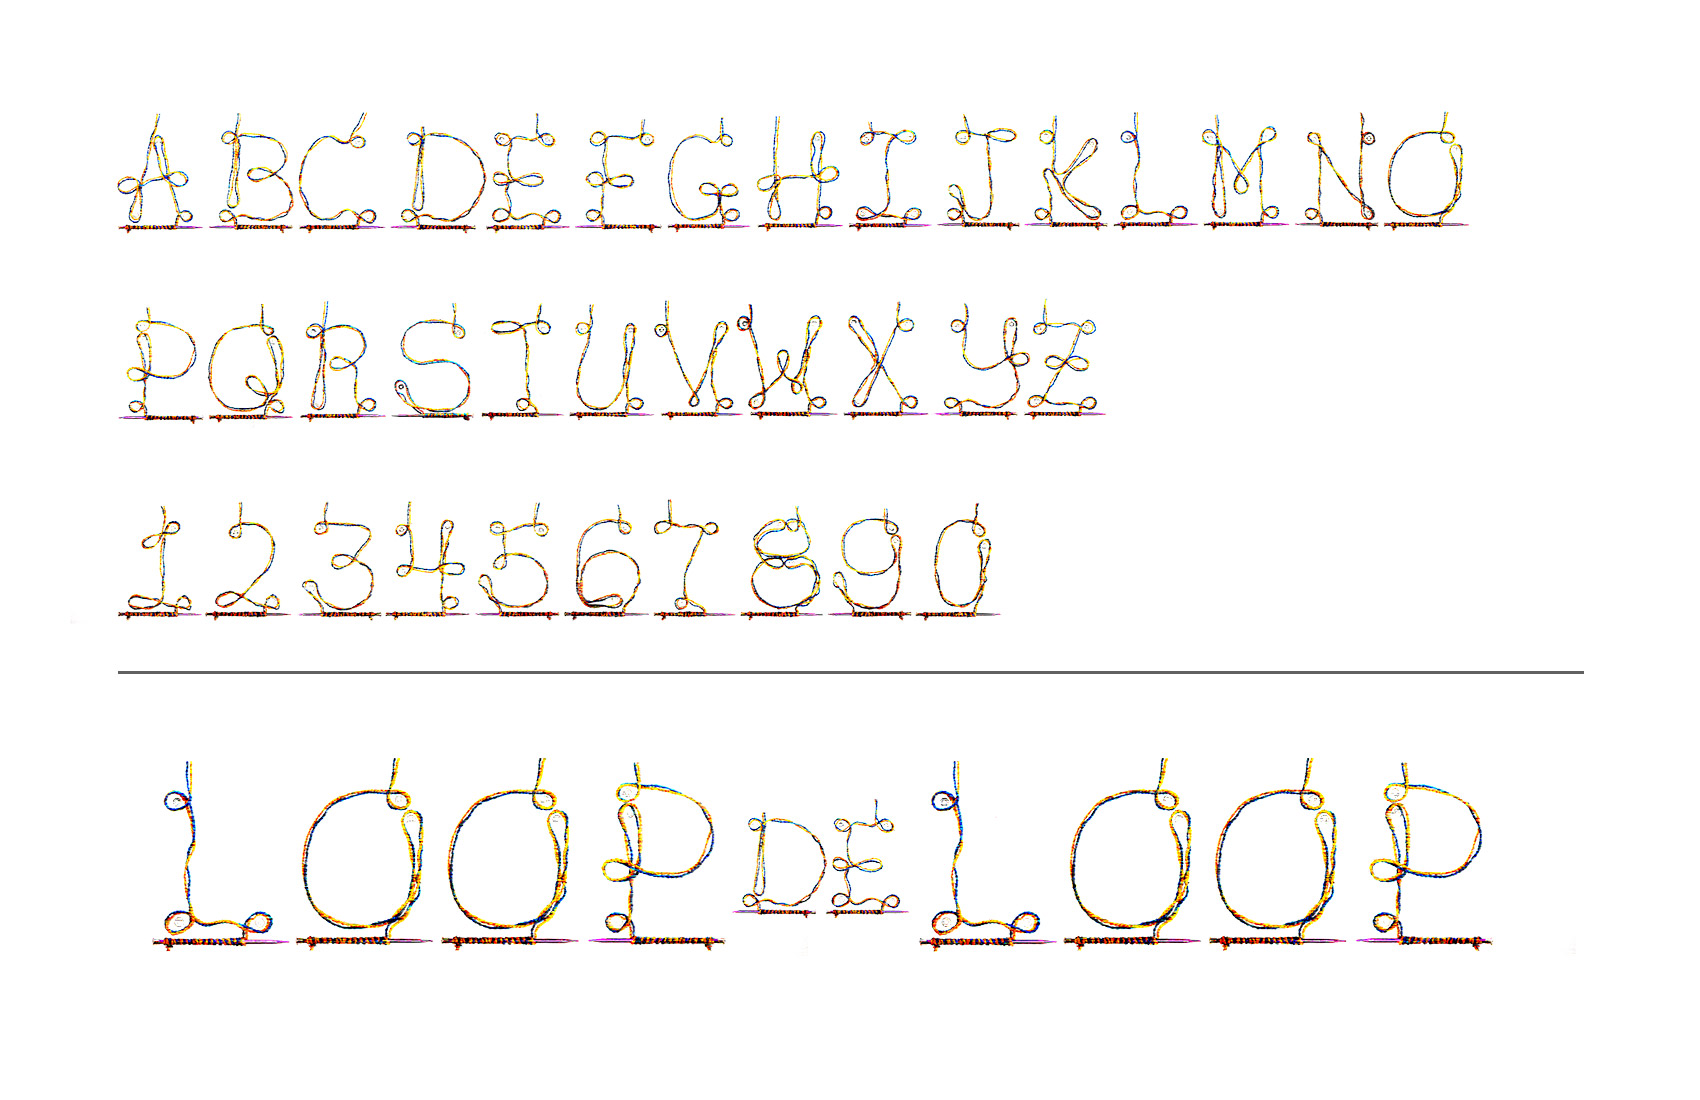 Loop-de-Loop typeface